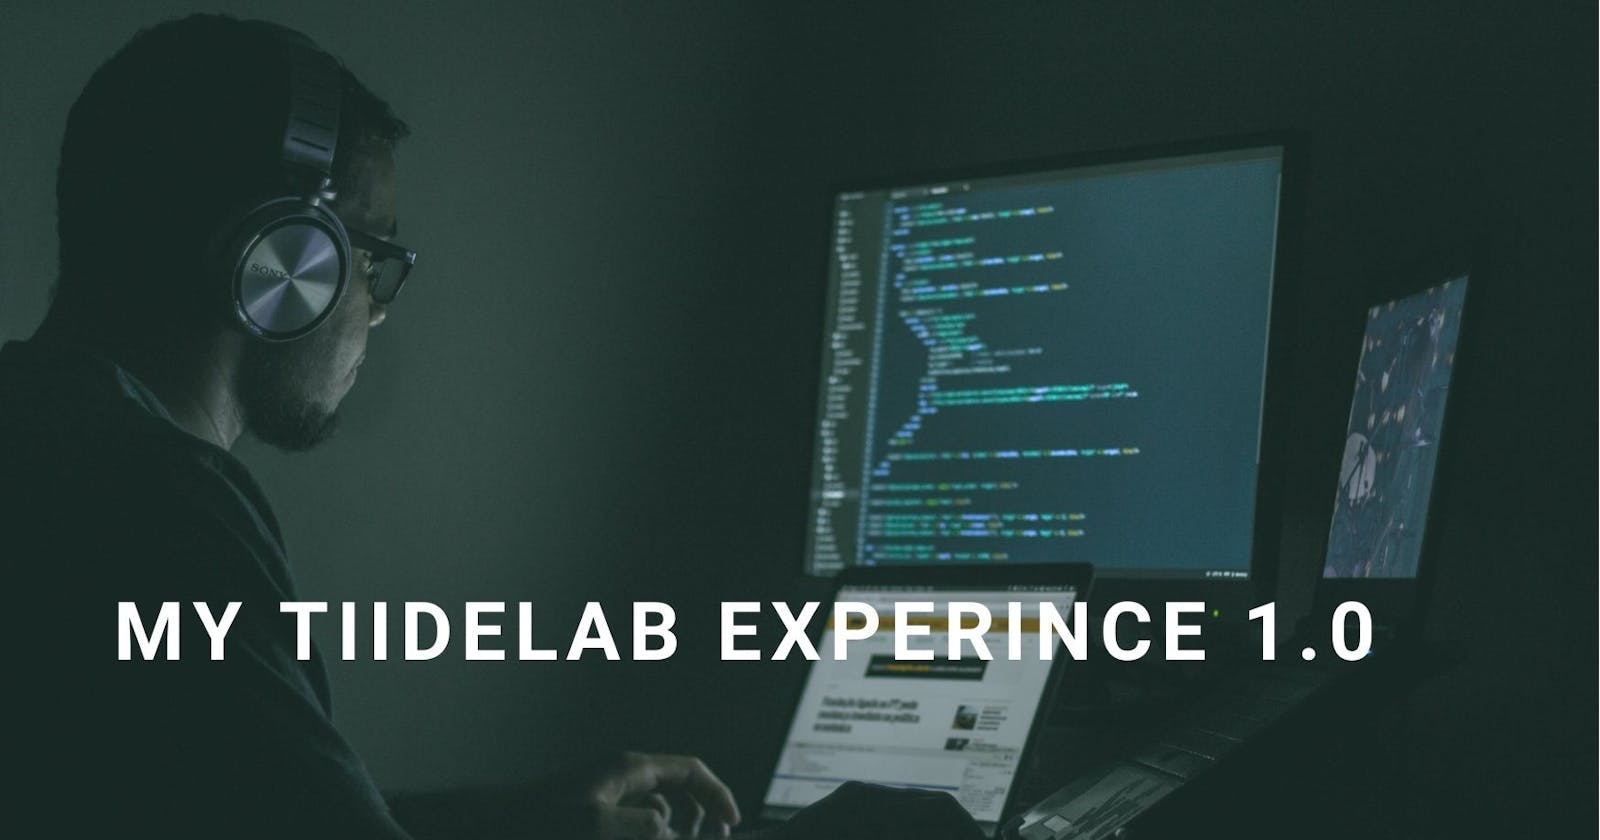 My TIIDElab Experience 1.0